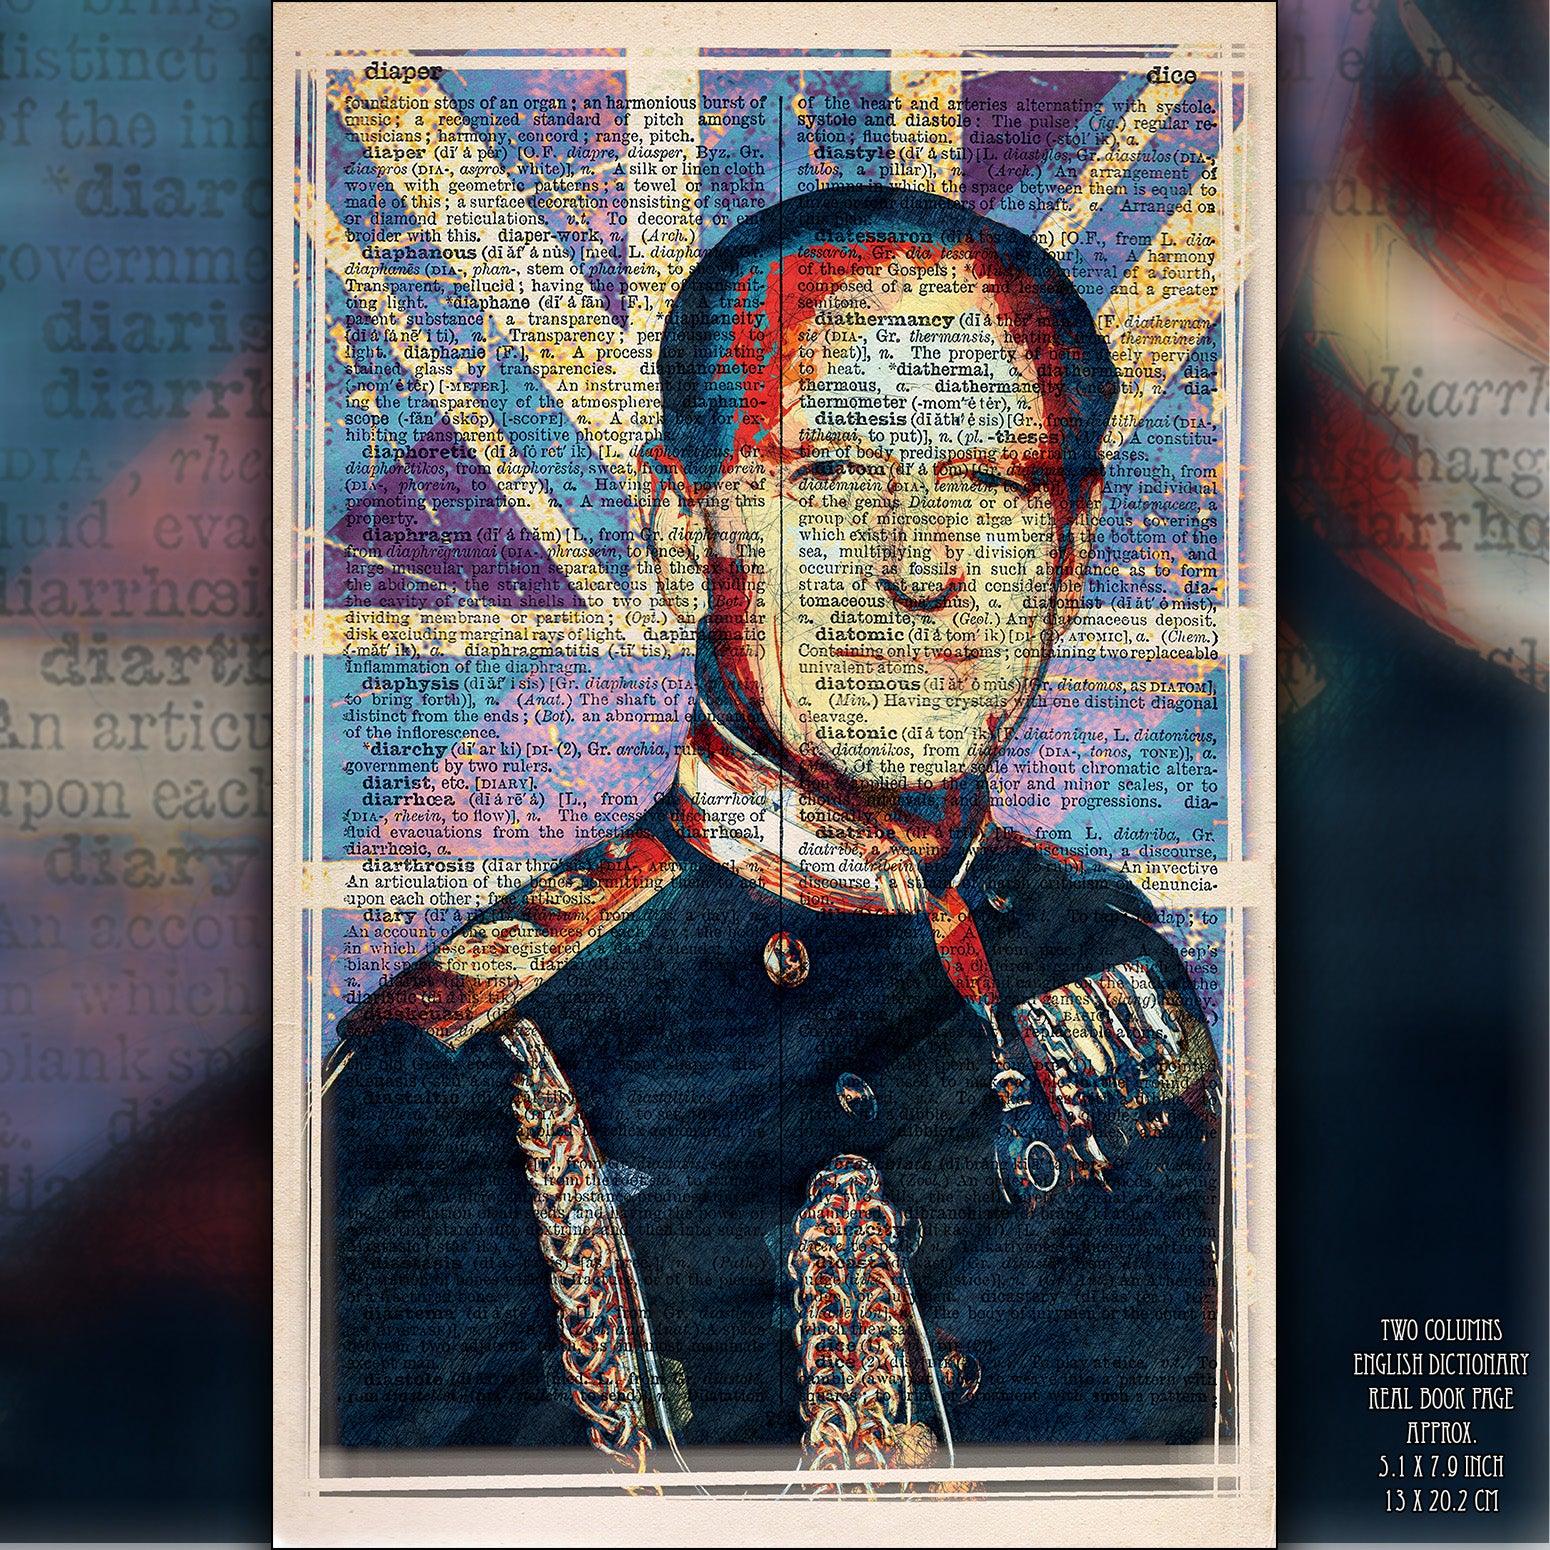 Prince Philip Duke of Edinburgh Art Poster on Vintage Dictionary Page - ArtCursor